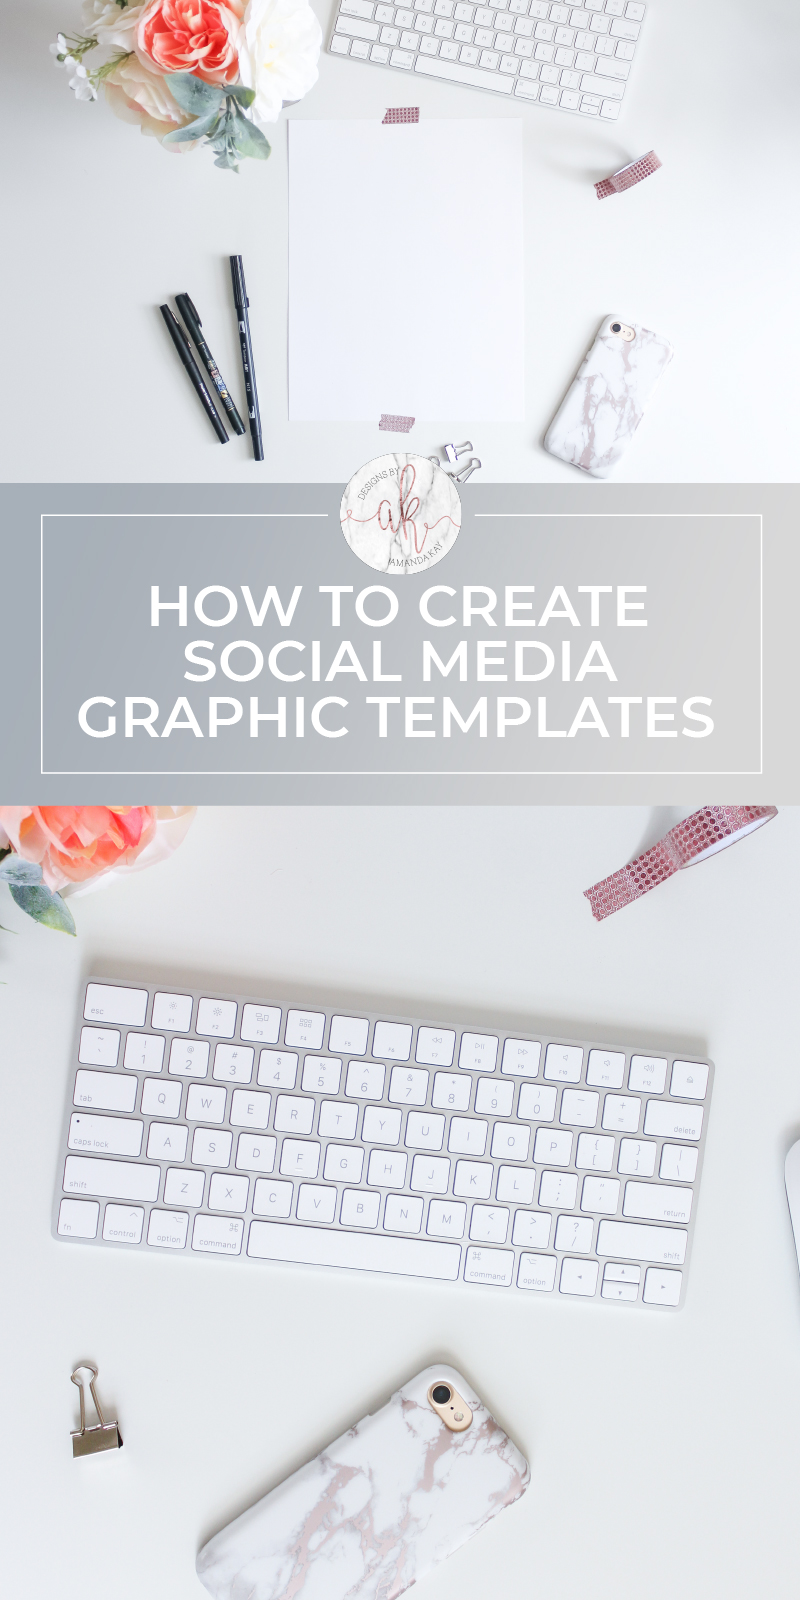 How to Create Social Media Templates using Adobe Illustrator